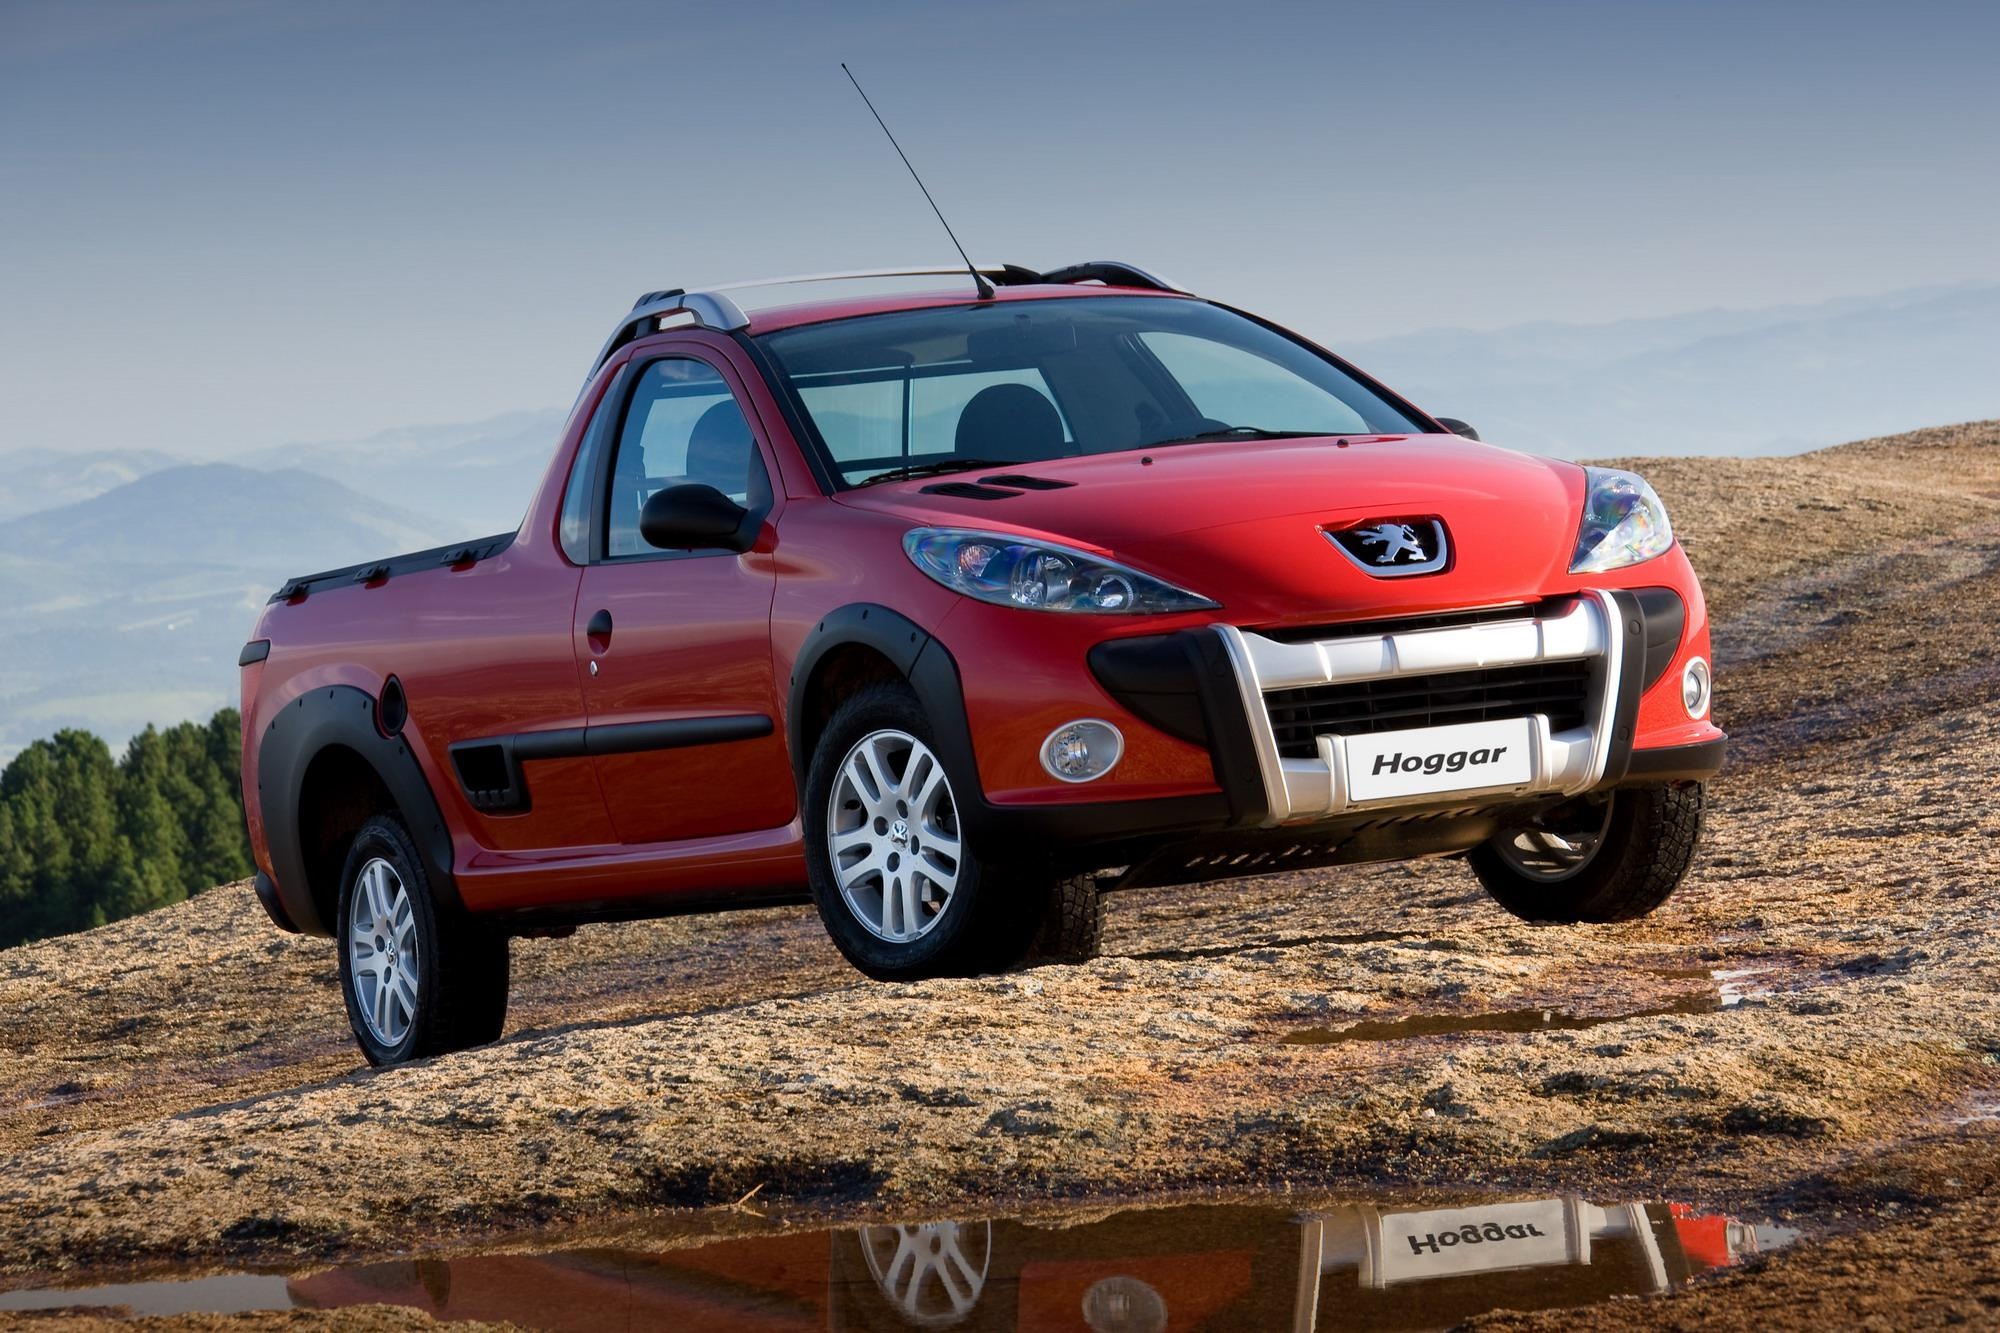 Peugeot Pick Up, Auto enthusiast, 2011 model, Hoggar version, 2000x1340 HD Desktop